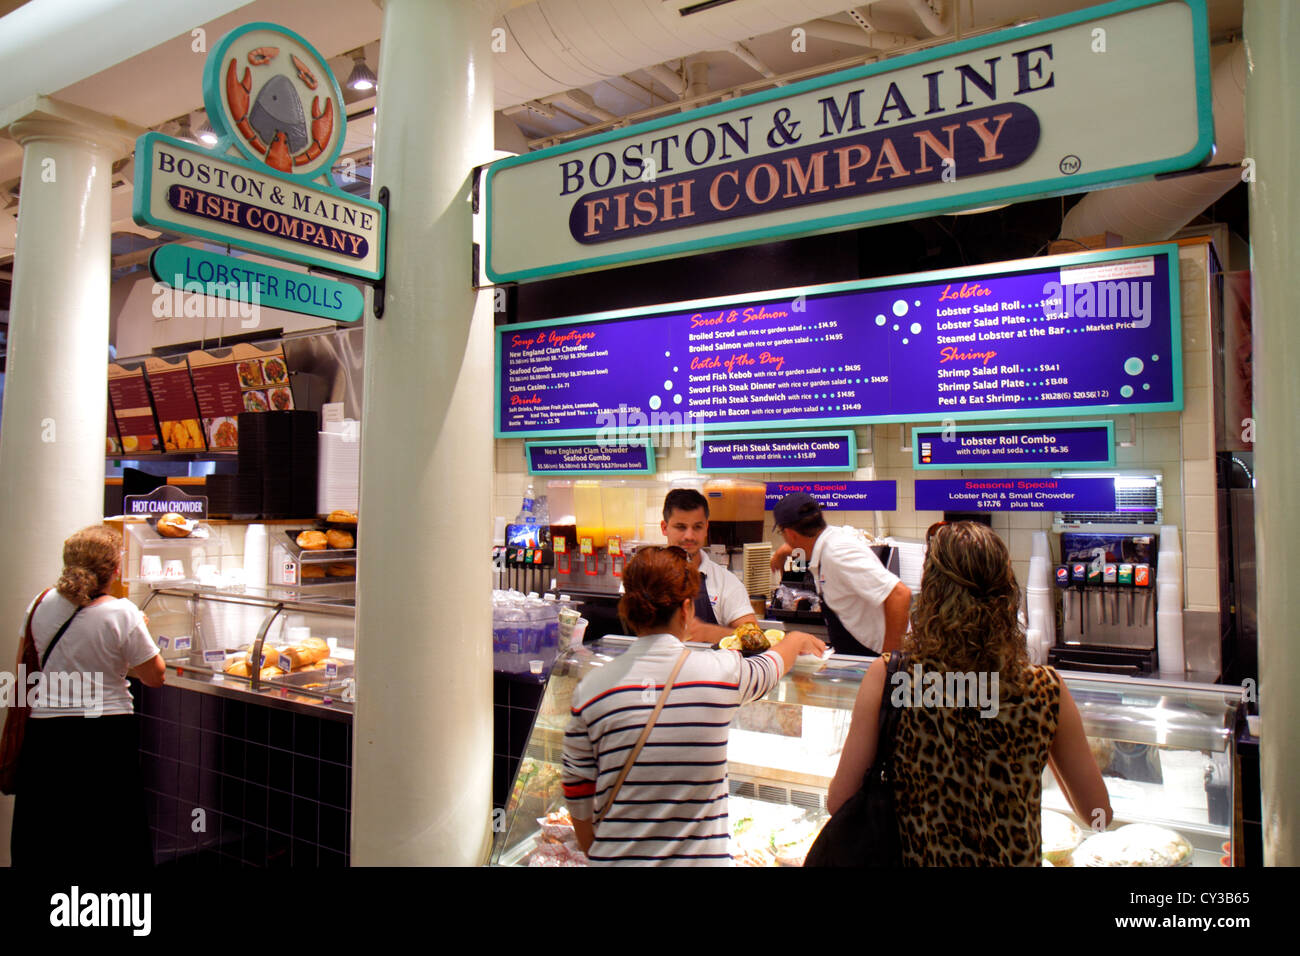 Boston Massachusetts,Faneiul Hall Marketplace,Quincy Market,food,vendor vendors stall stalls booth market marketplace,Boston & Maine Fish Company,lobs Stock Photo